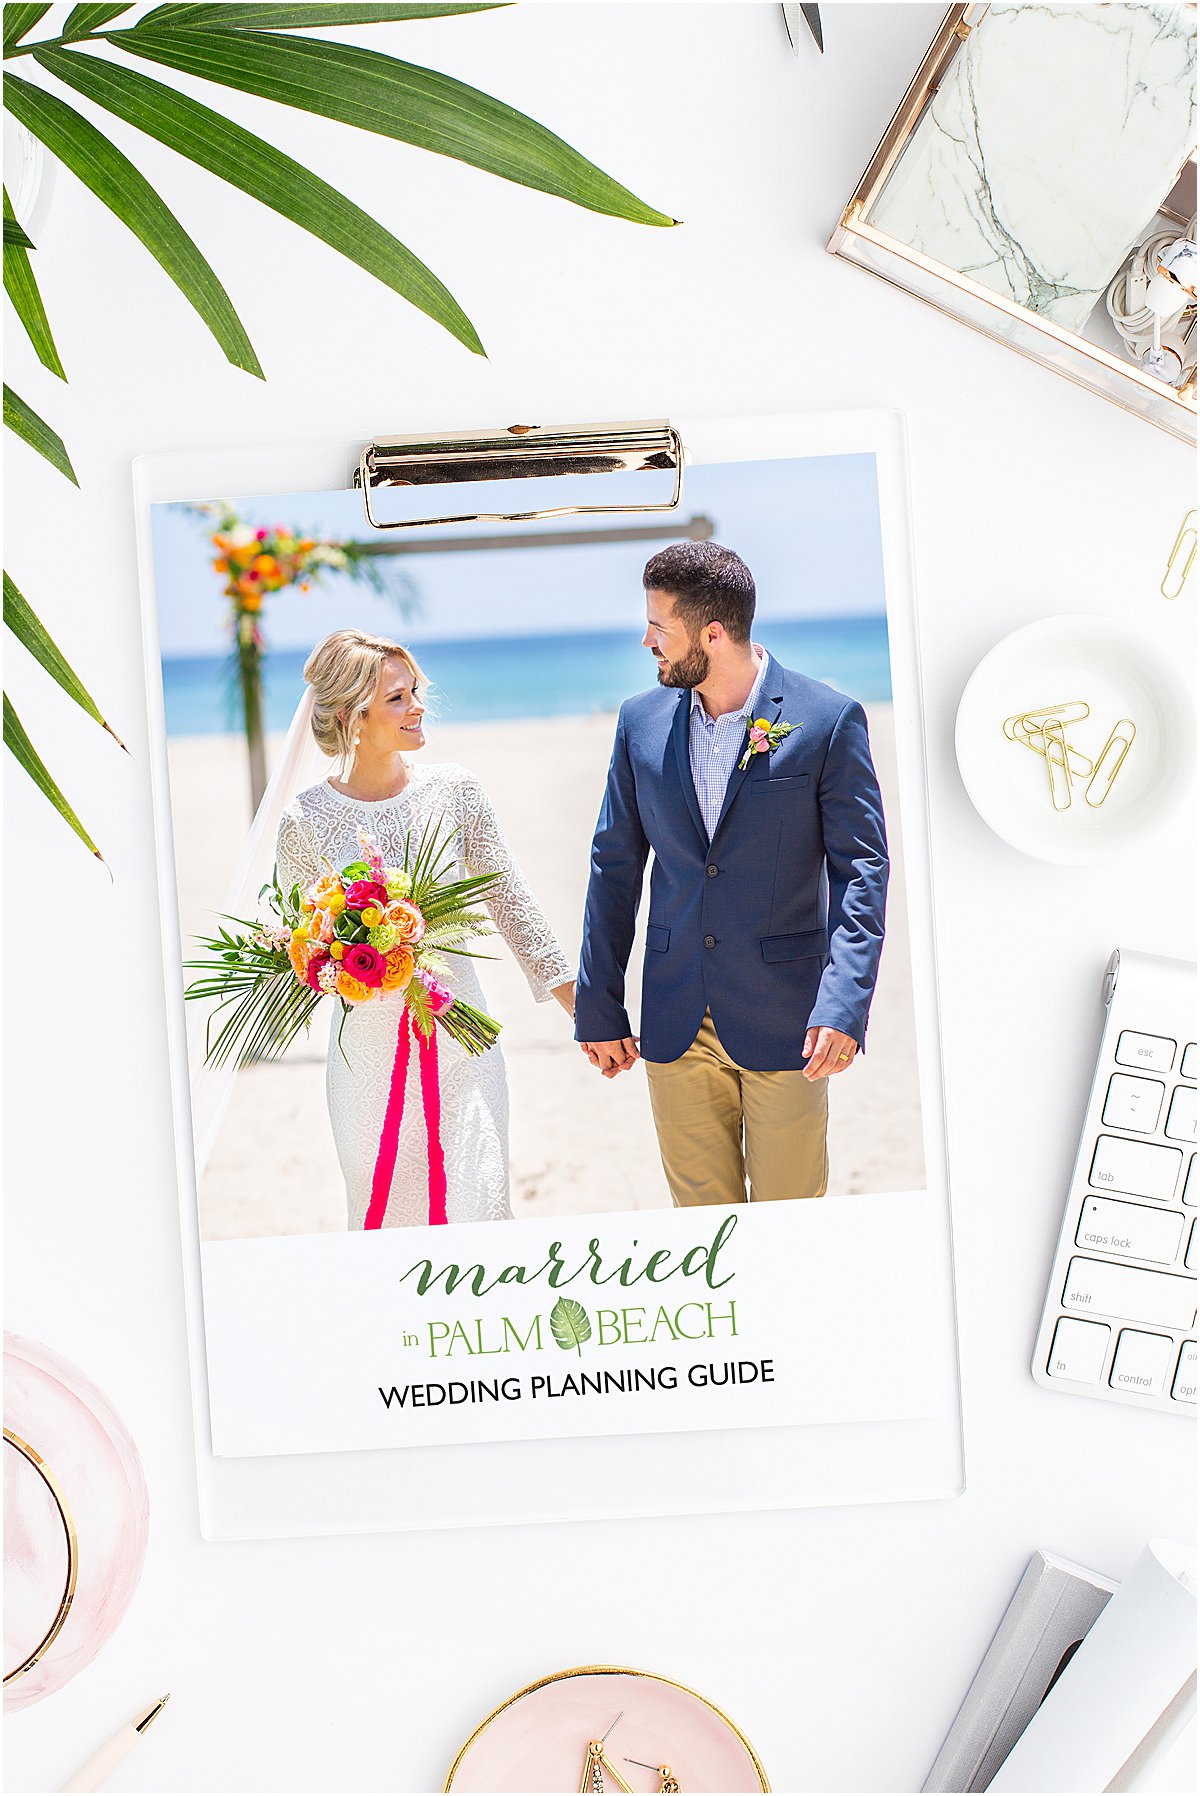 Palm Beach Wedding Planning Guide | Palm Beach, FL | Married in Palm Beach | www.marriedinpalmbeach.com | Krystal Zaskey Photography